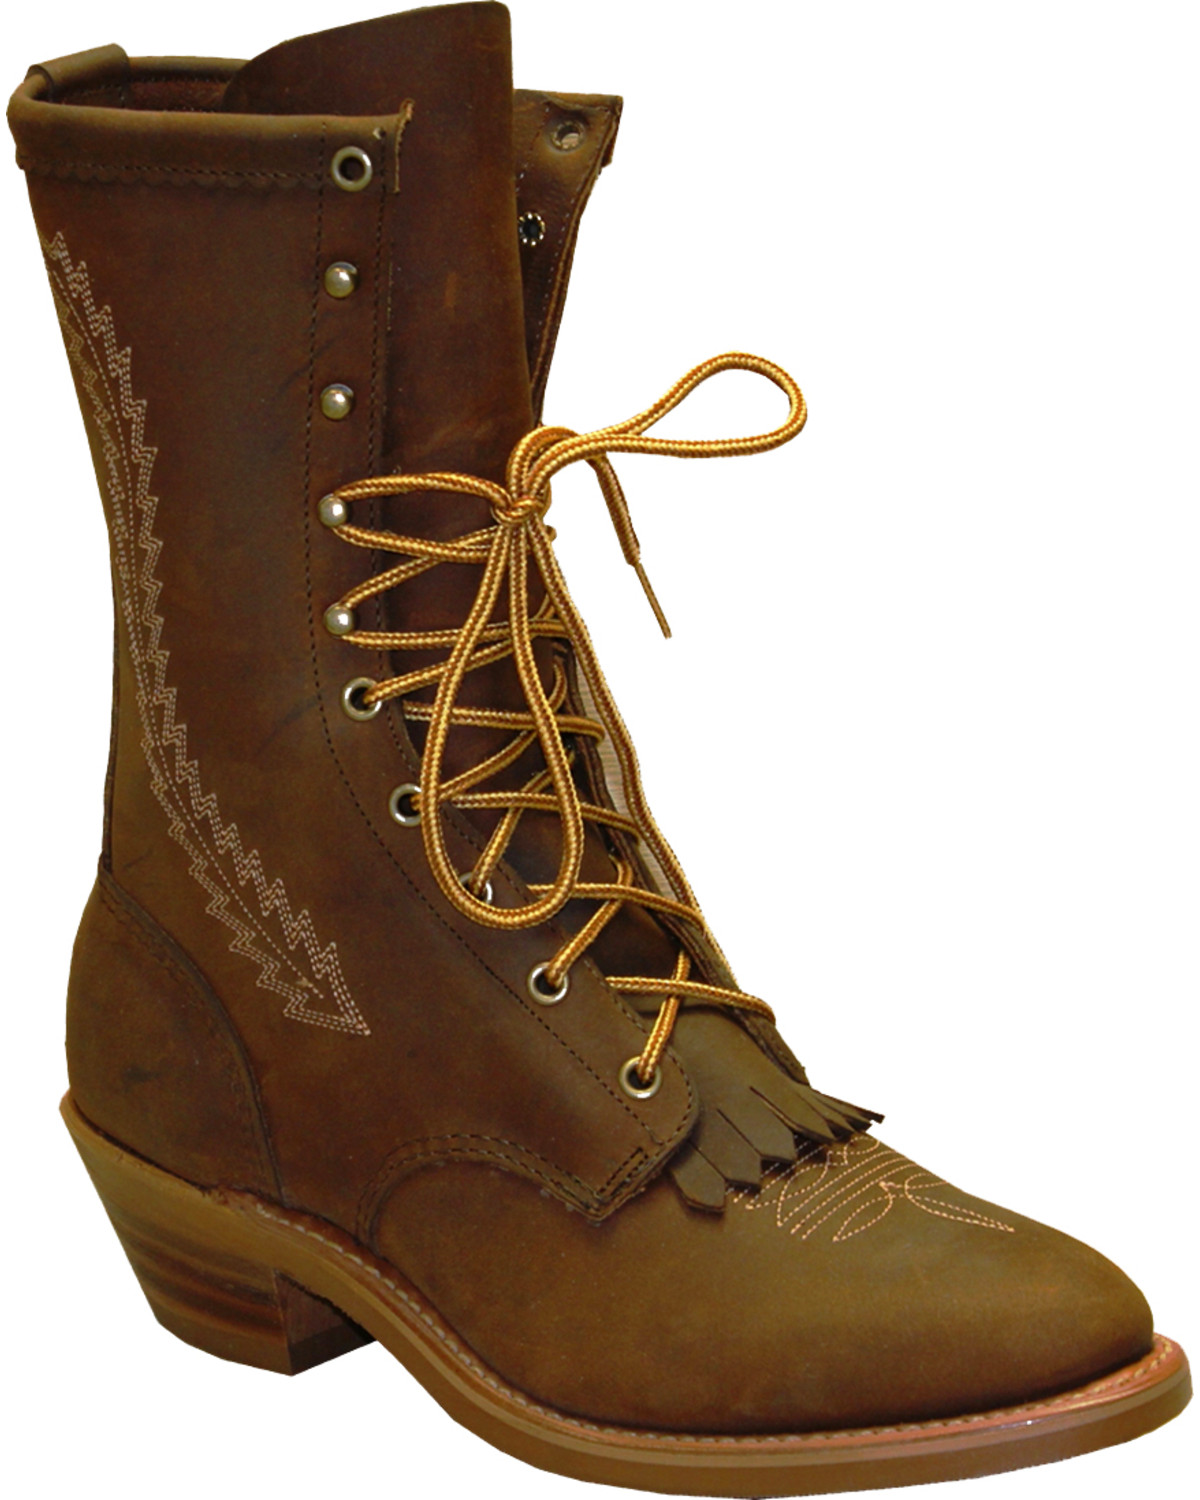 Abilene Men's 12" Western Packer Boots - Soft Round Toe